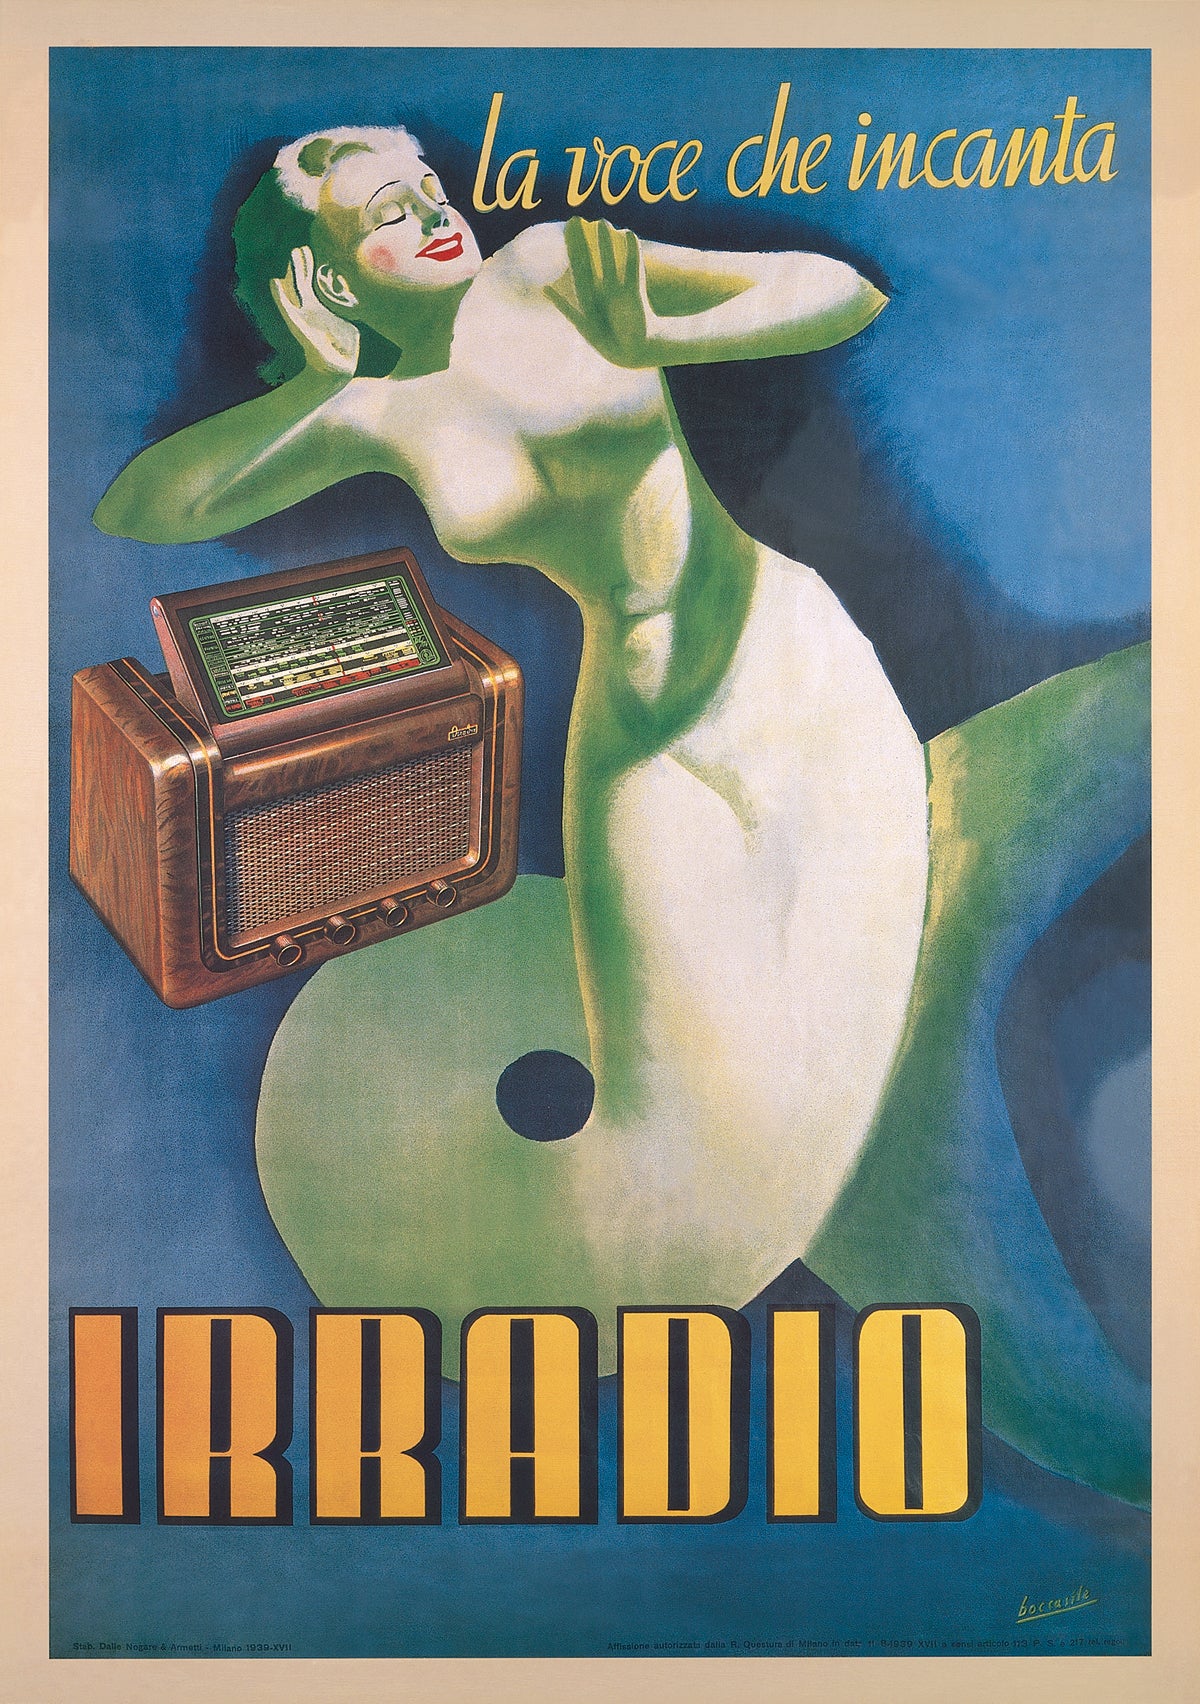 Gino Boccasile - Irradio, 1939